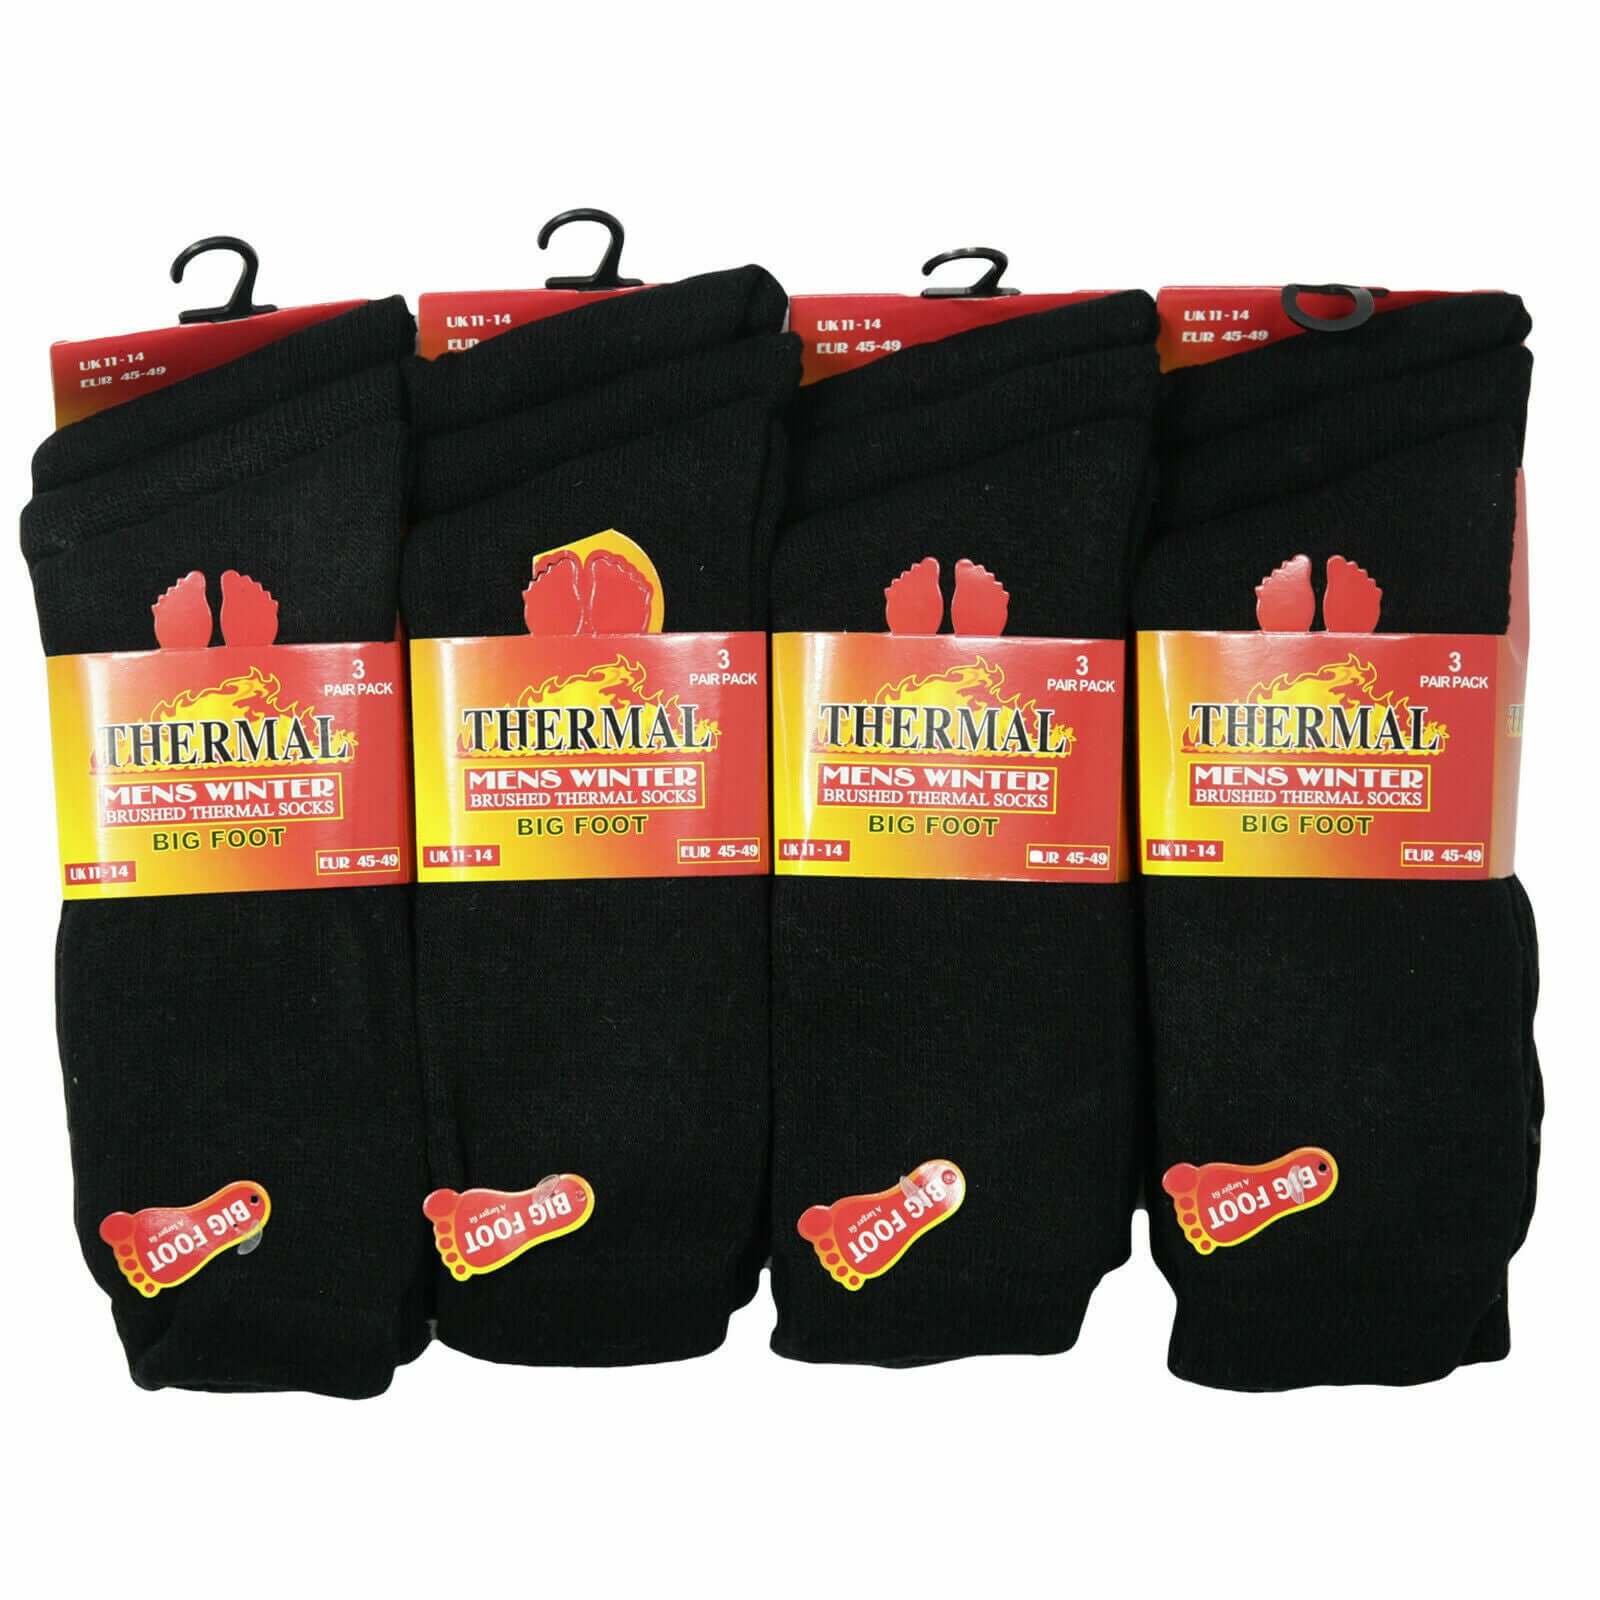 Mens Big Foot Thermal Socks Hiking Hike Boot Socks Shoe Size 11-14 Lot  3 6 12